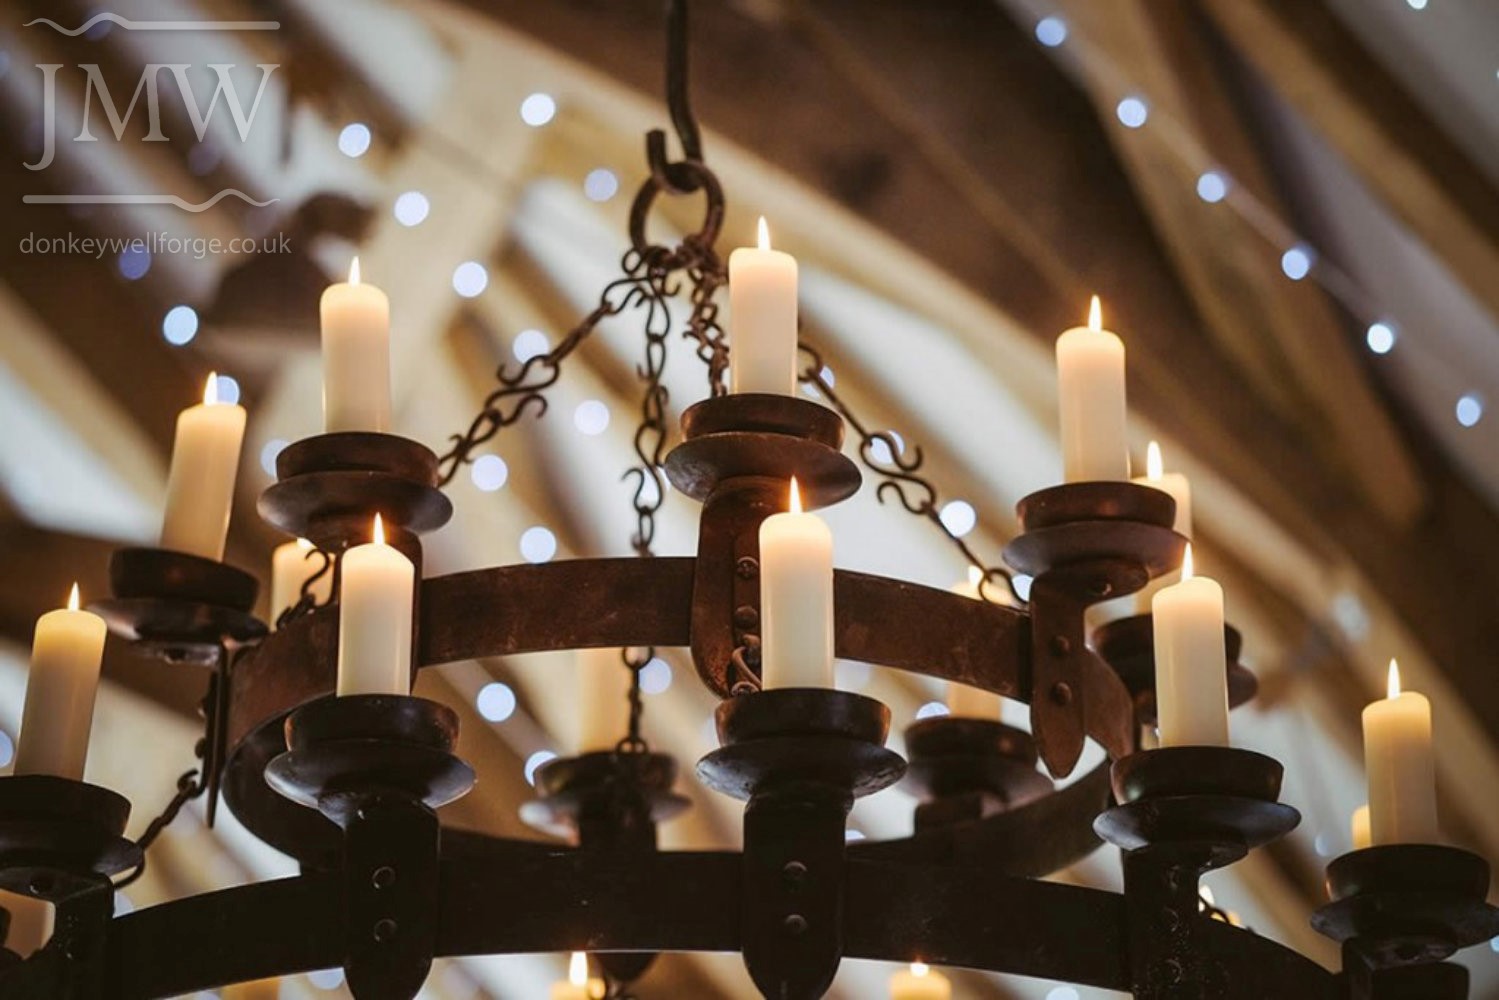 iron-forged-riveted-candelabra-healey-barn-wedding-venue-donkeywell-forge